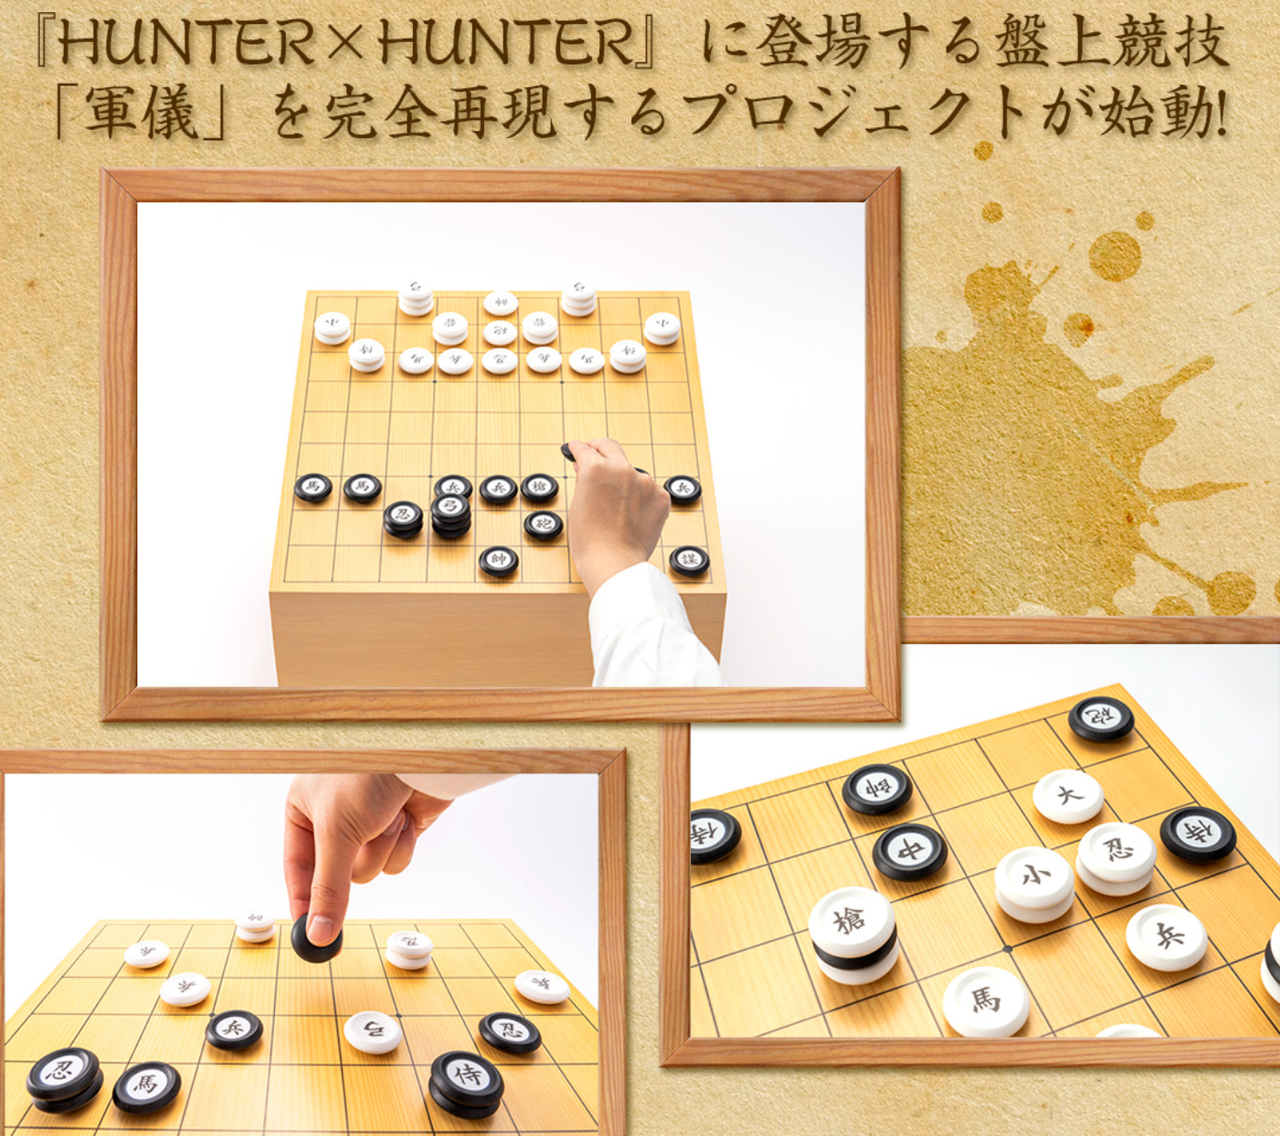 HUNTER X HUNTER Gungi (軍儀) | Request Details